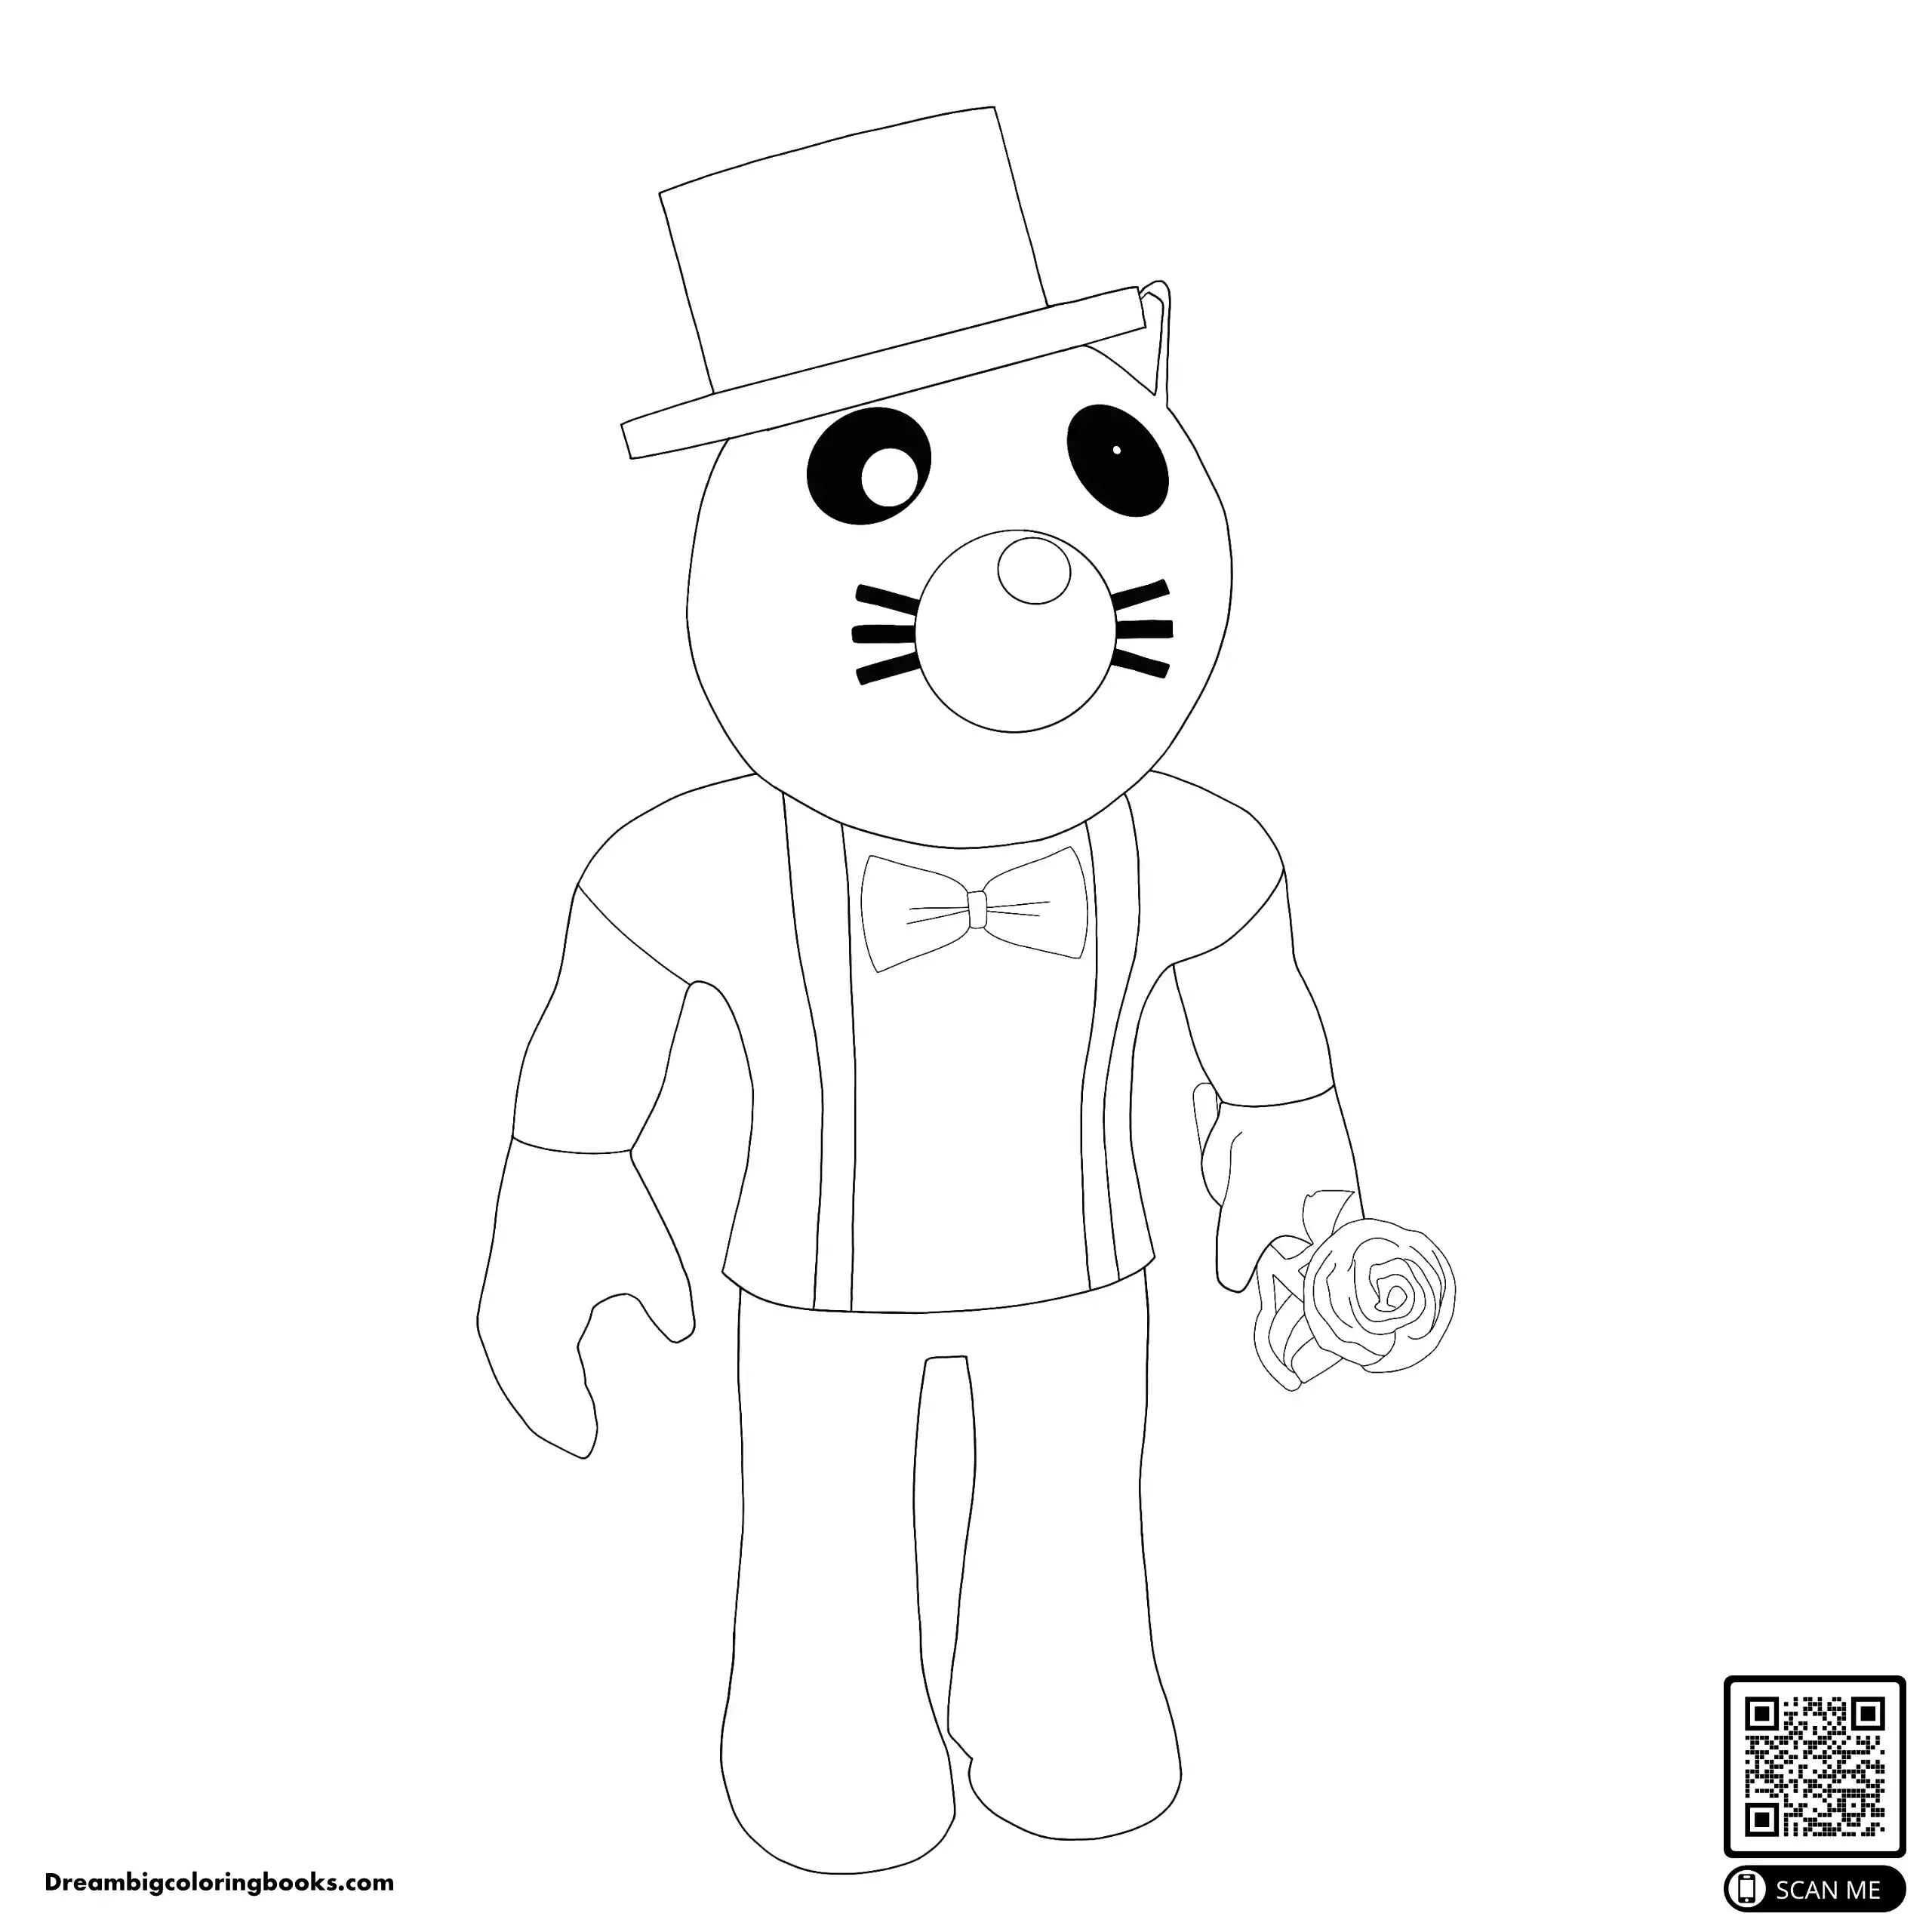 Roblox Cat Felix coloring page